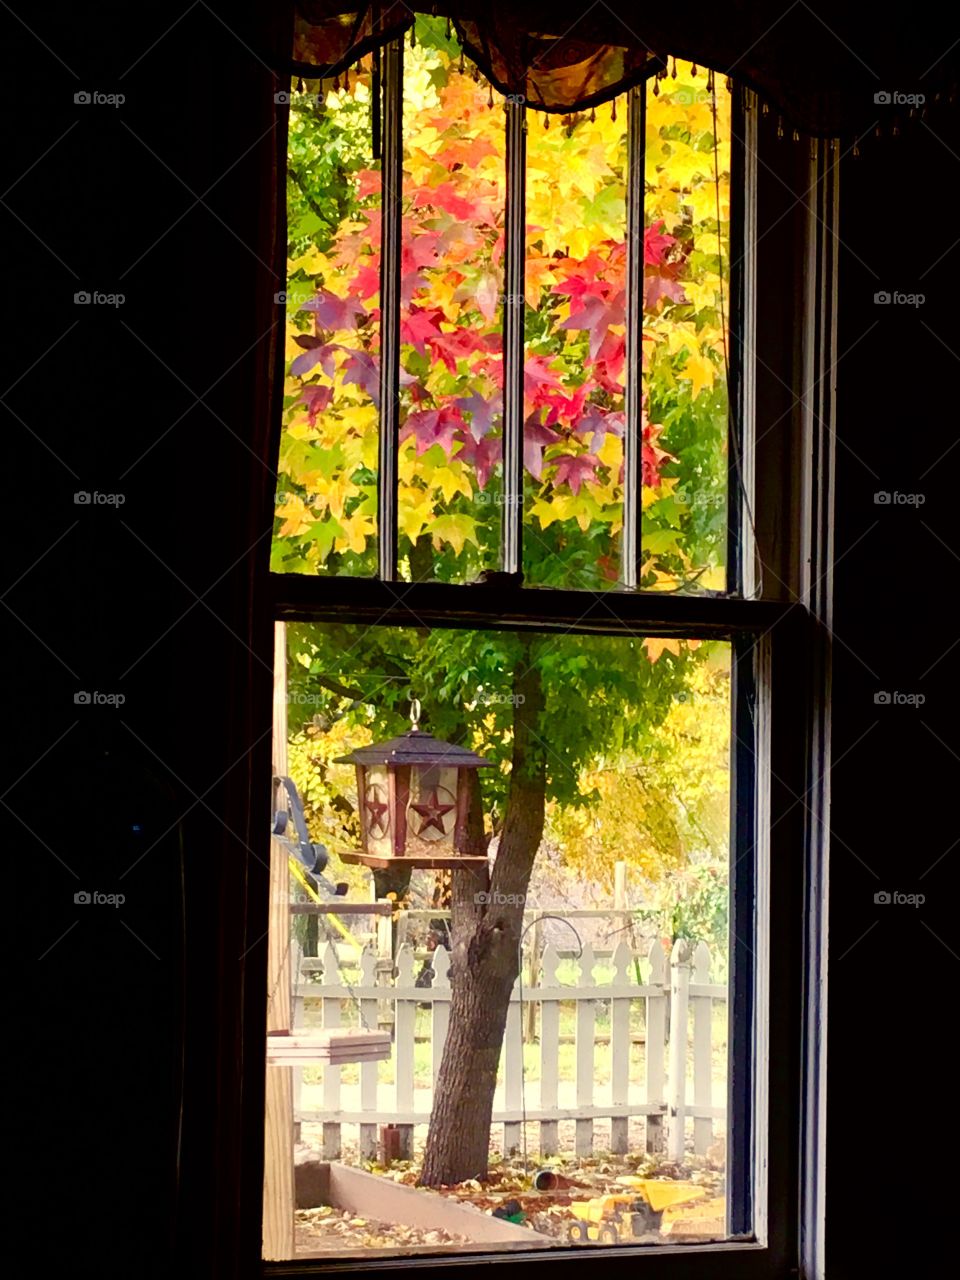 Fall leaves on tree viewed through vintage home window 